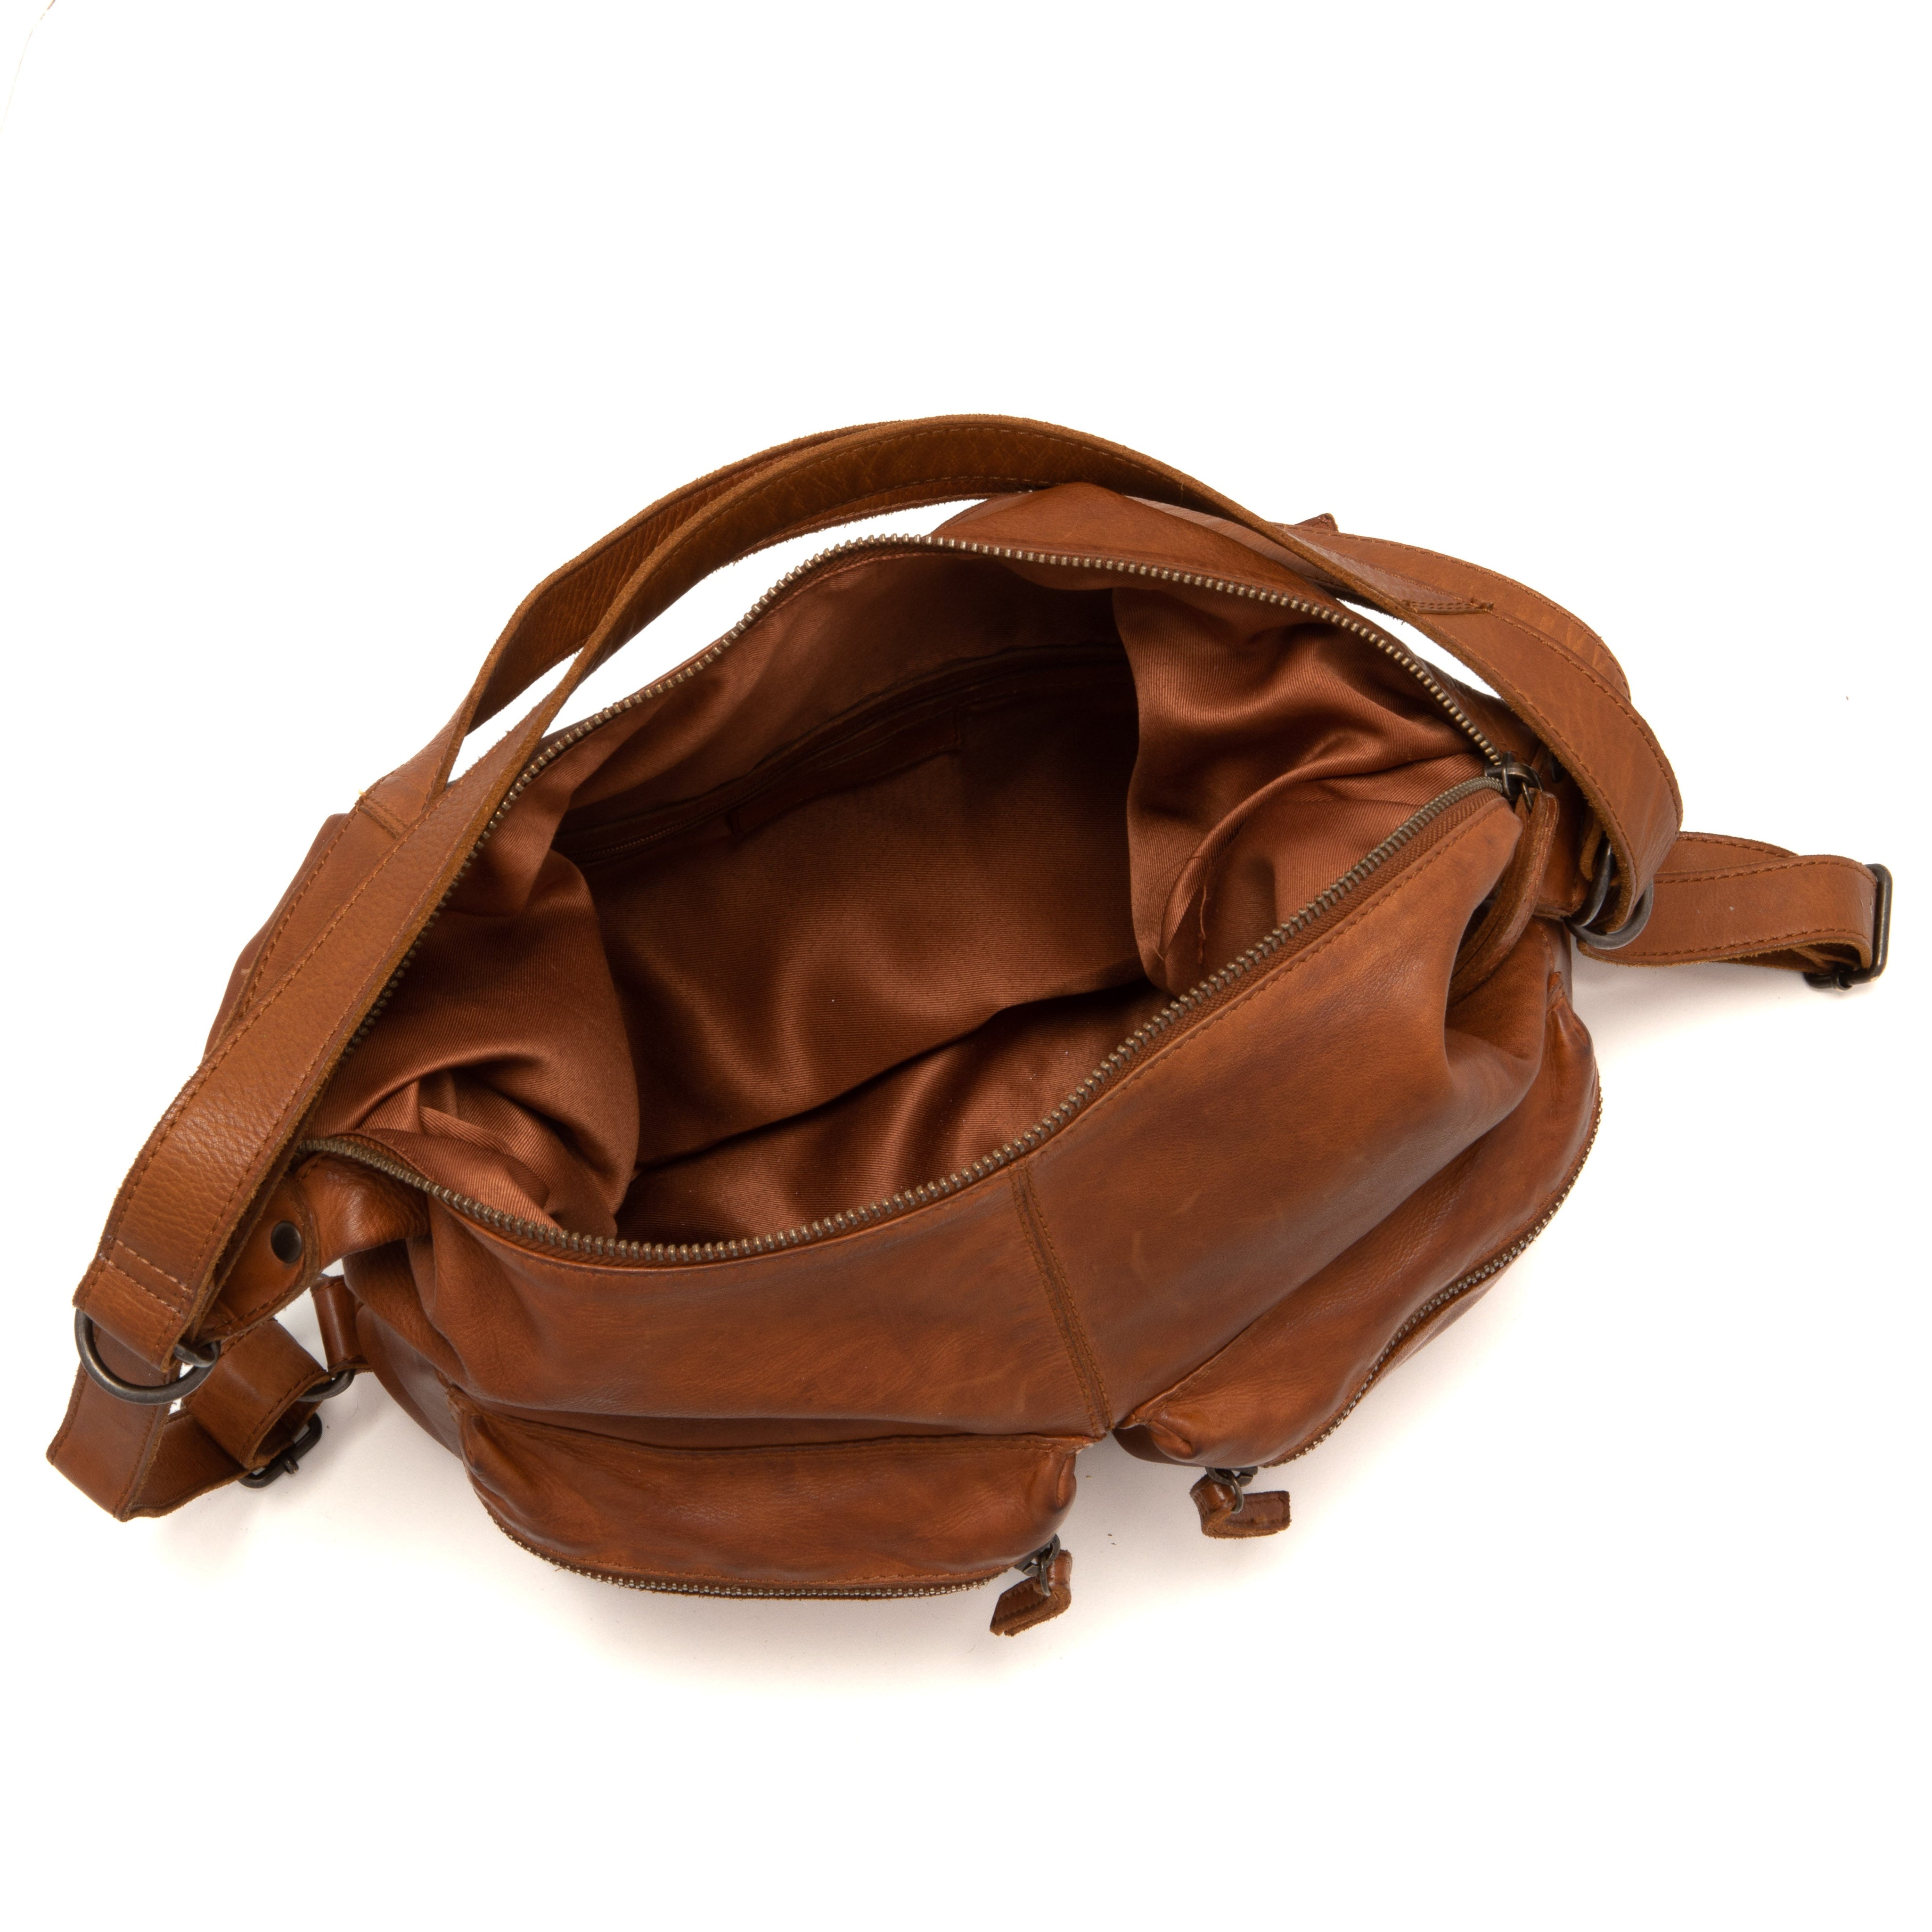 Gianni Conti Vistra Convertible Leather Bag